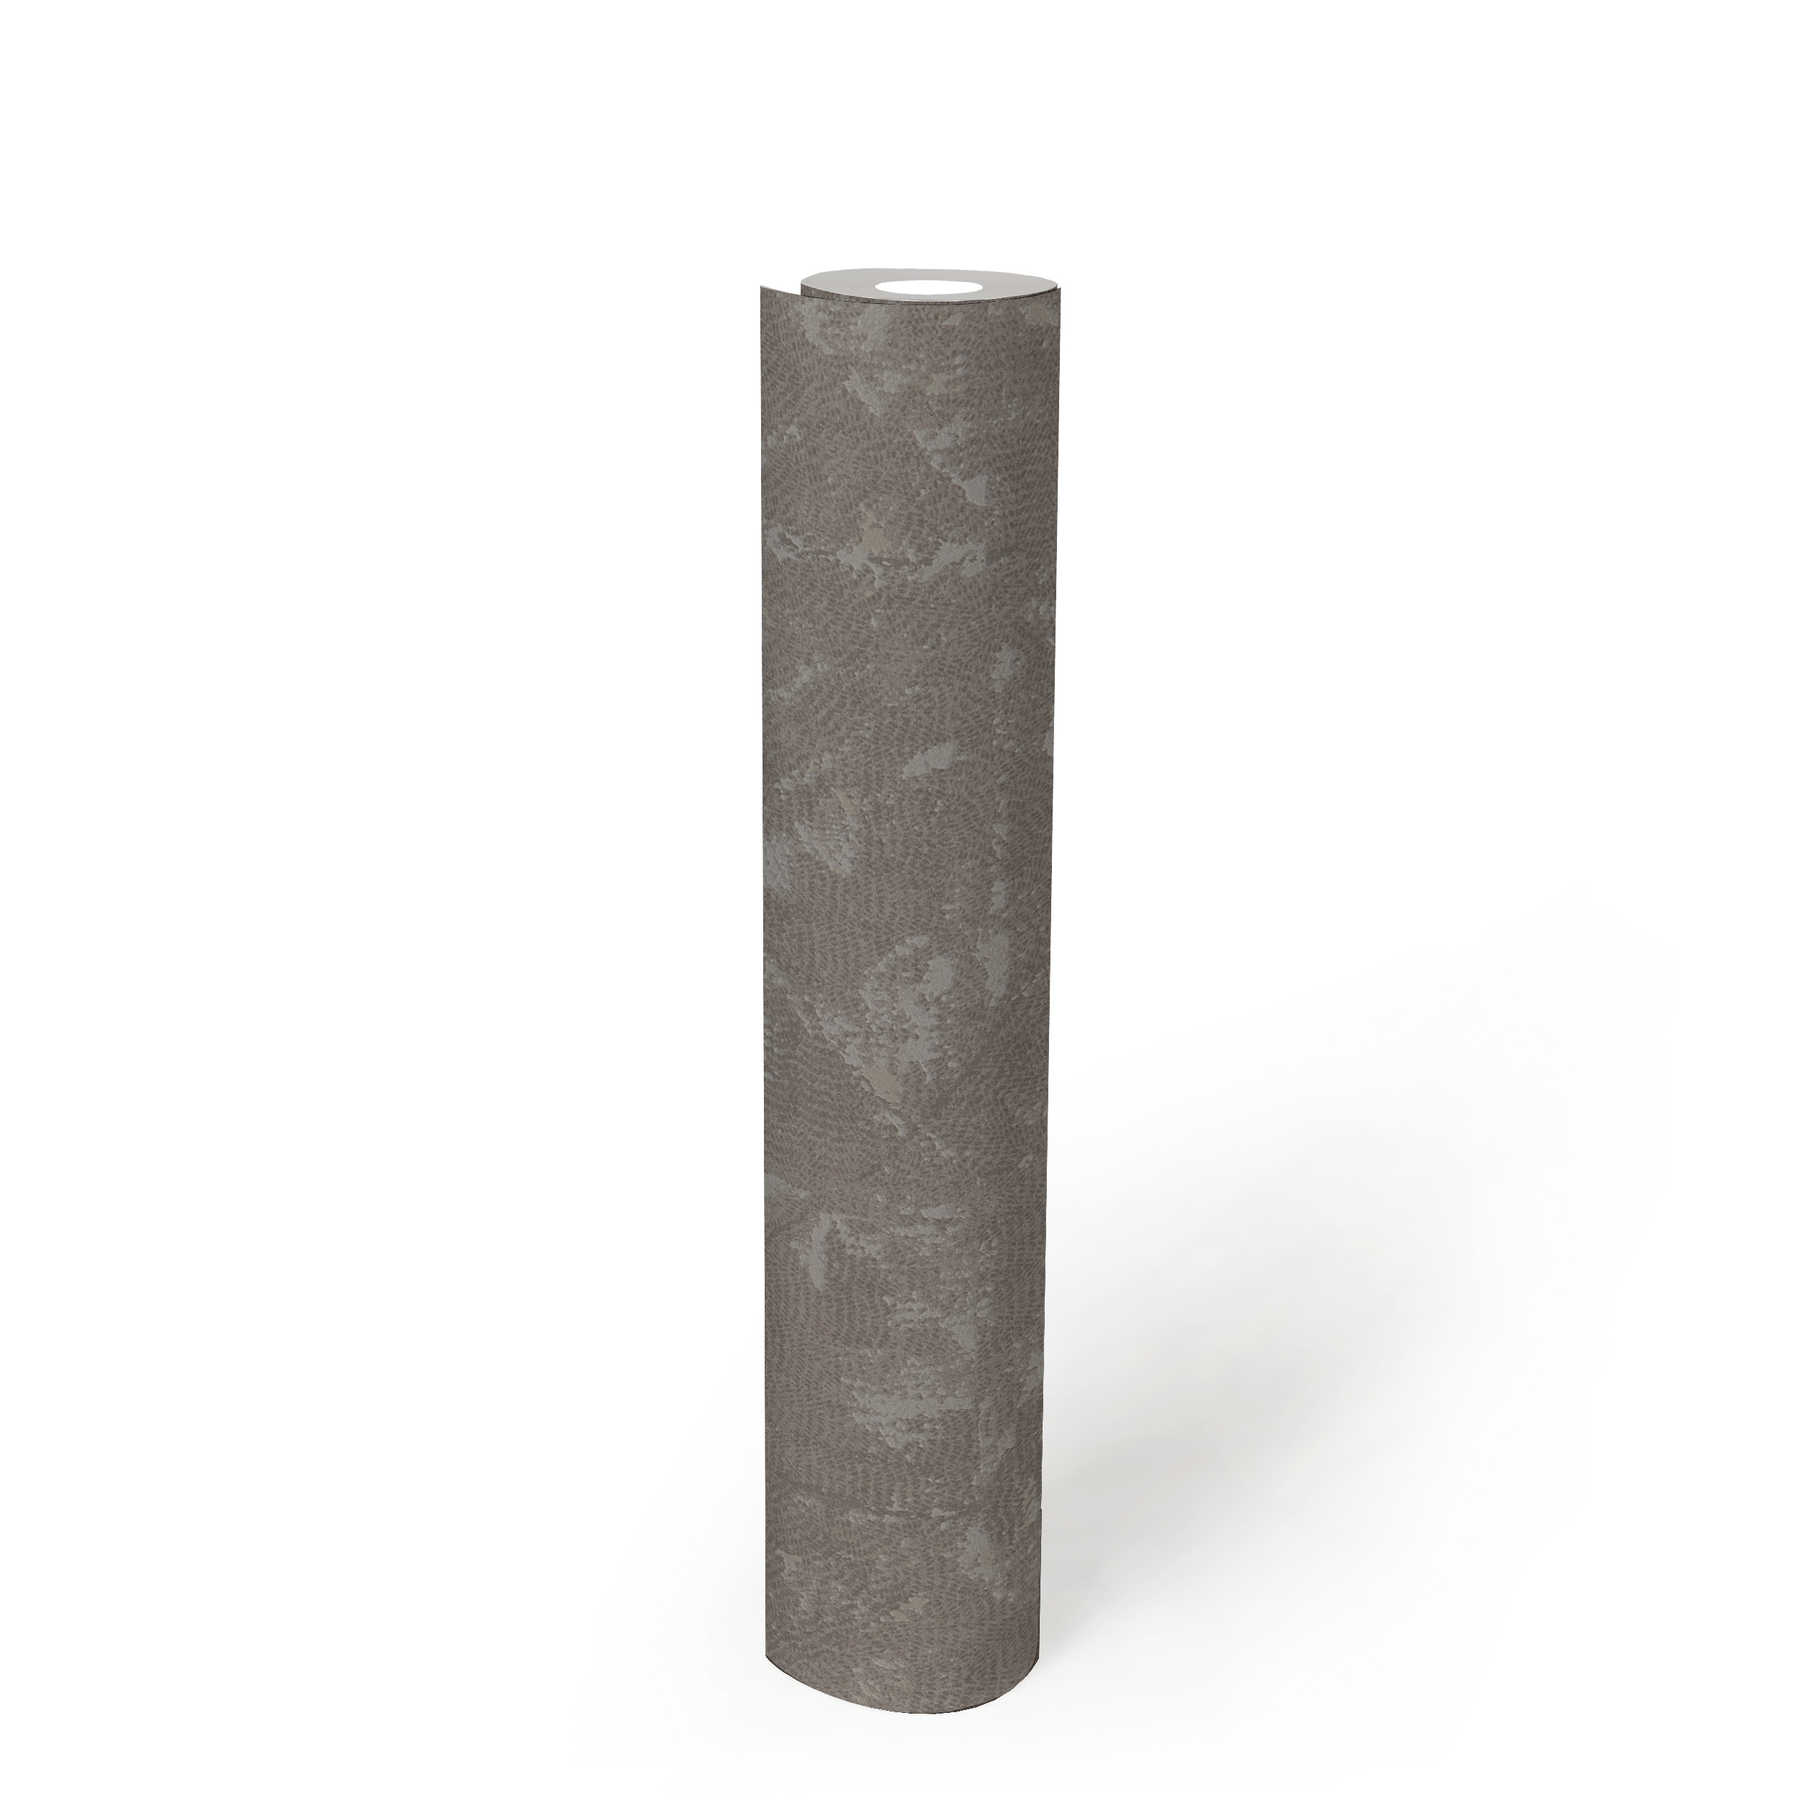             Unifarbene Vliestapete in Grau, asymmetrische Details – Grau, Silber
        